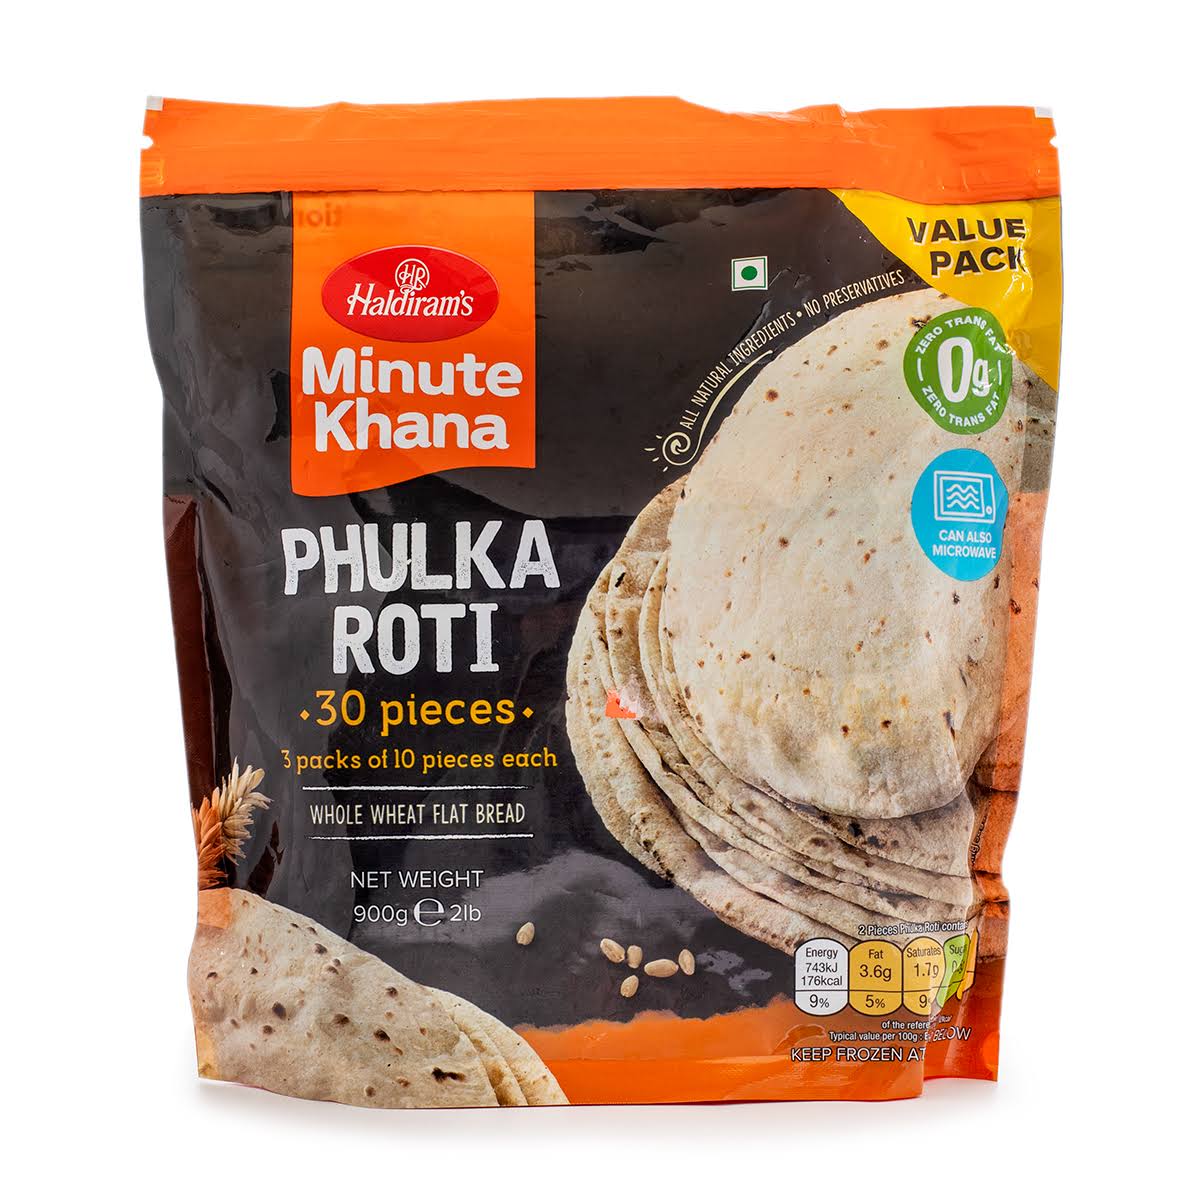 Haldiram's Phulka Roti 30 Pieces - Kalustyan's - Delivered by Mercato